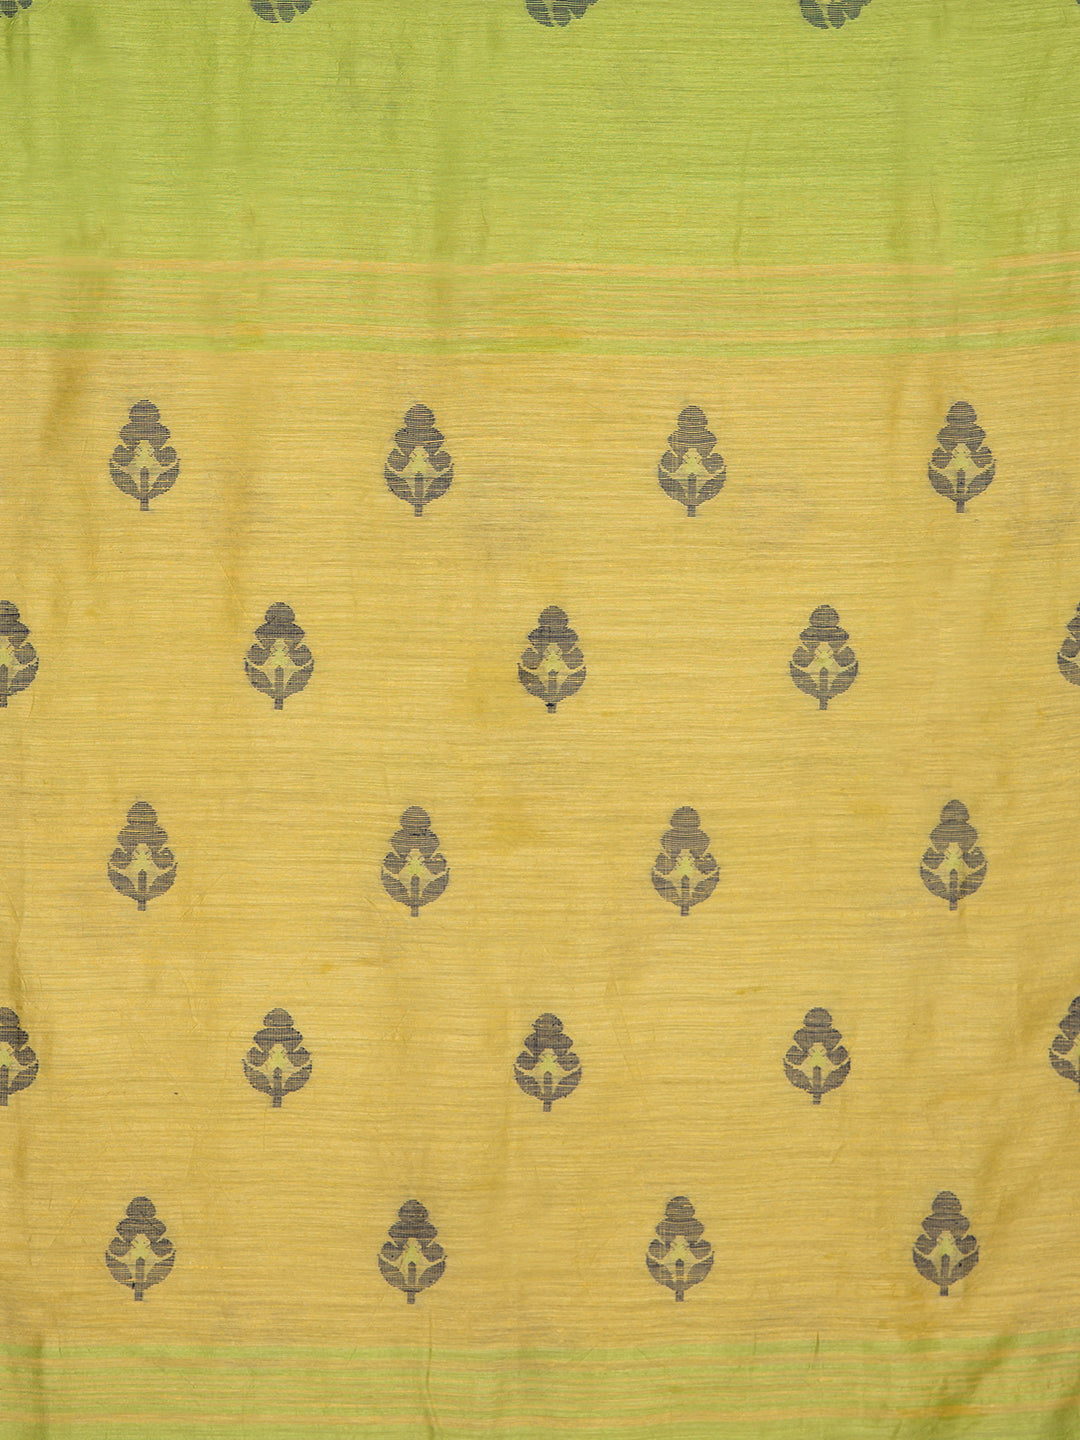 Green Yellow Handcrafted Jamdani Silk Saree